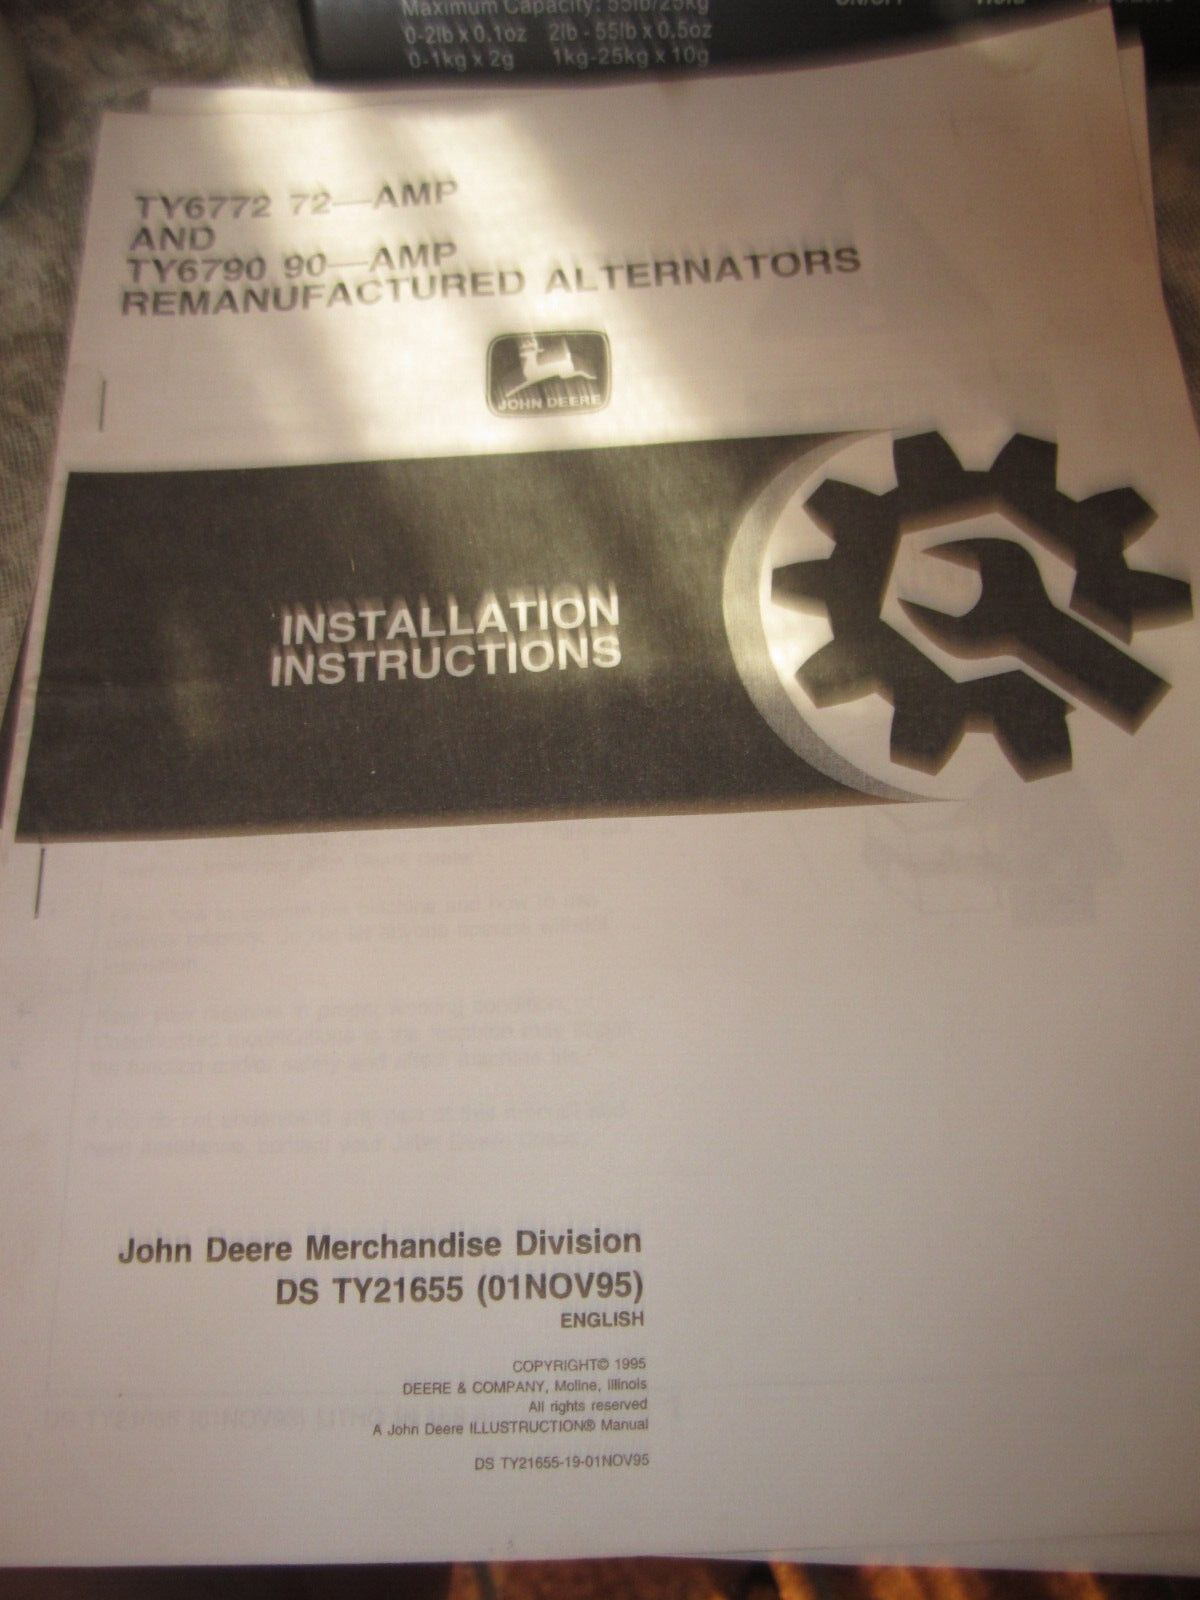 John Deere Remanufactured ALTERNATORS Installation Instruction 72 90 AMP TY21655